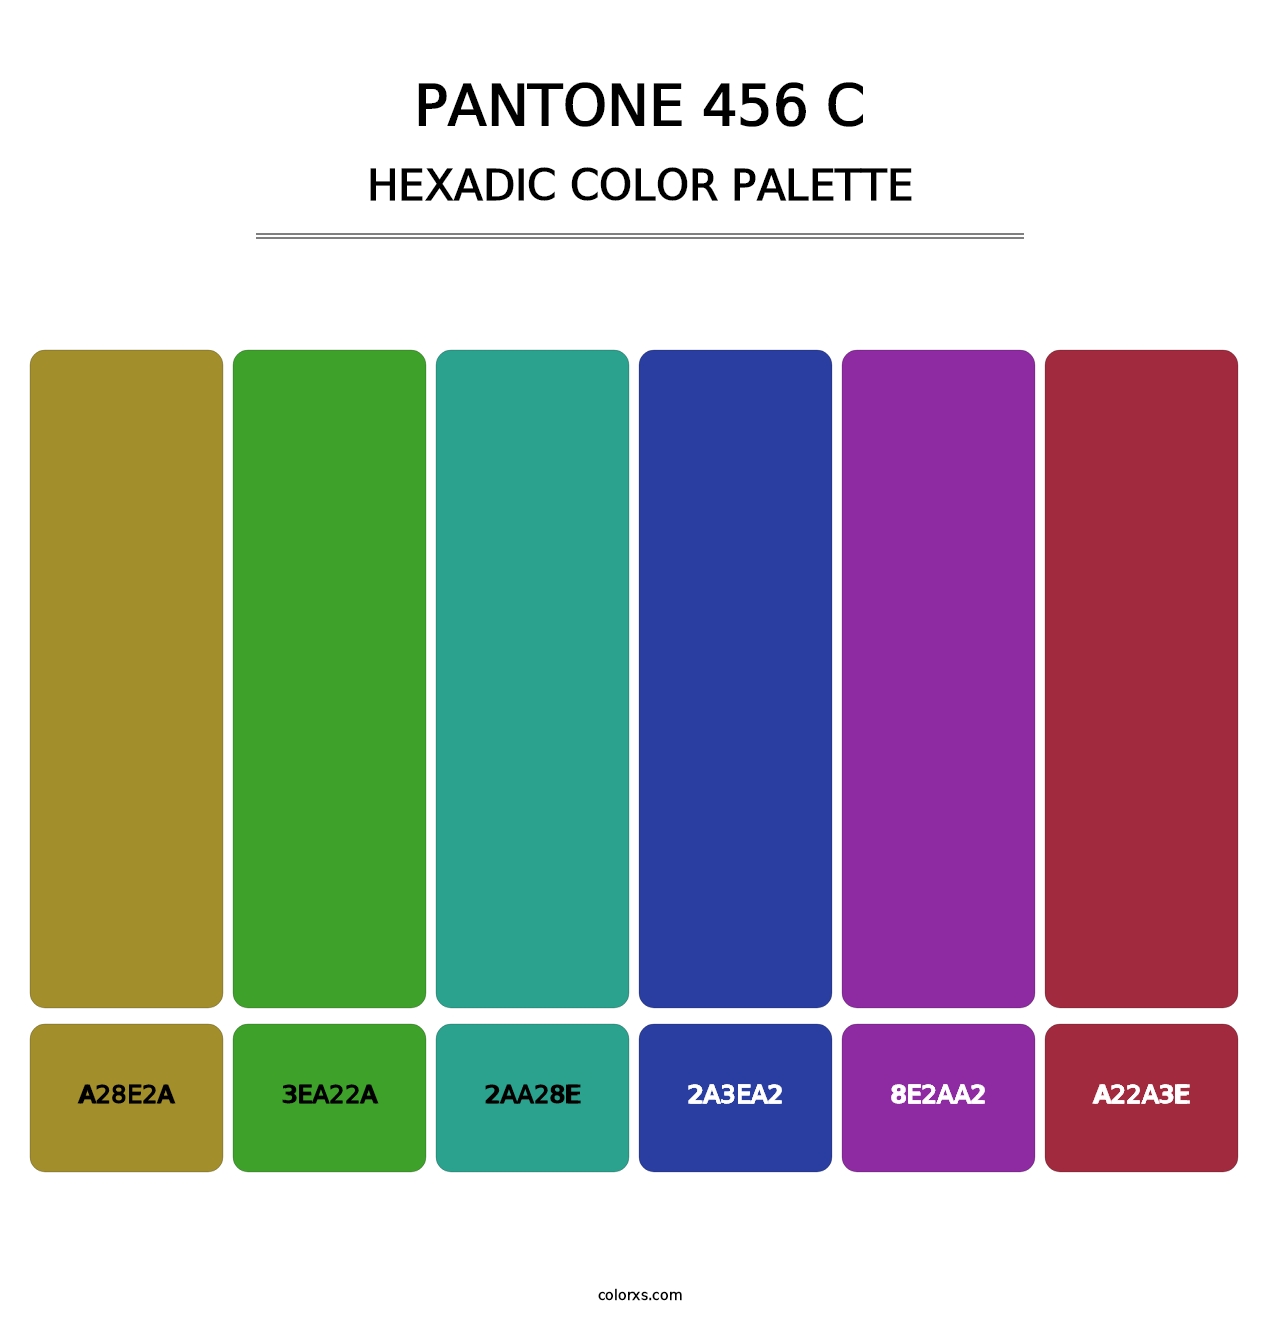 PANTONE 456 C - Hexadic Color Palette